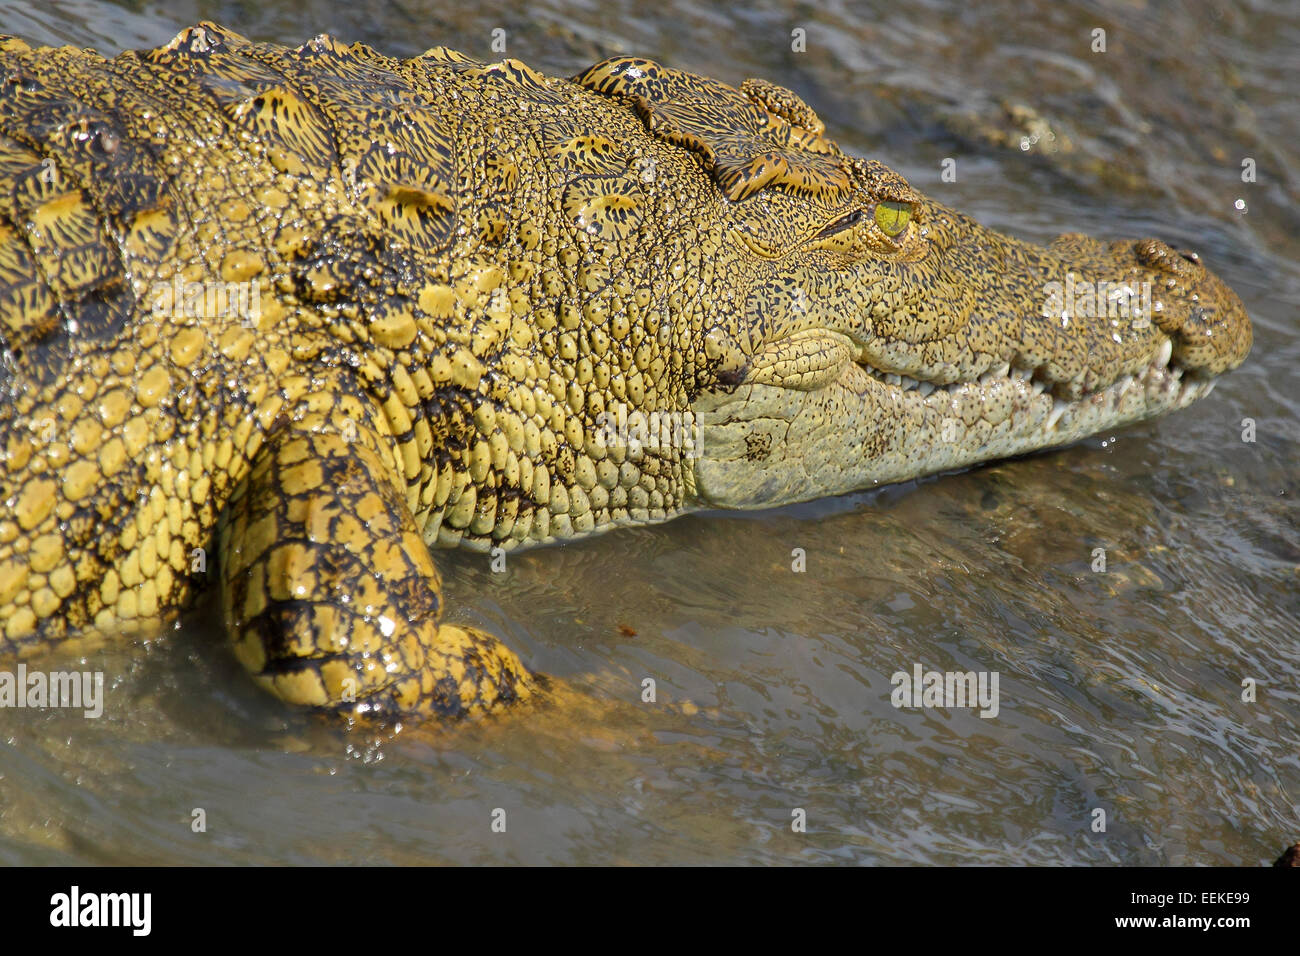 A young Nile Crocodile, Crocodylus niloticus, in the water in Serengeti National Park, Tanzania Stock Photo